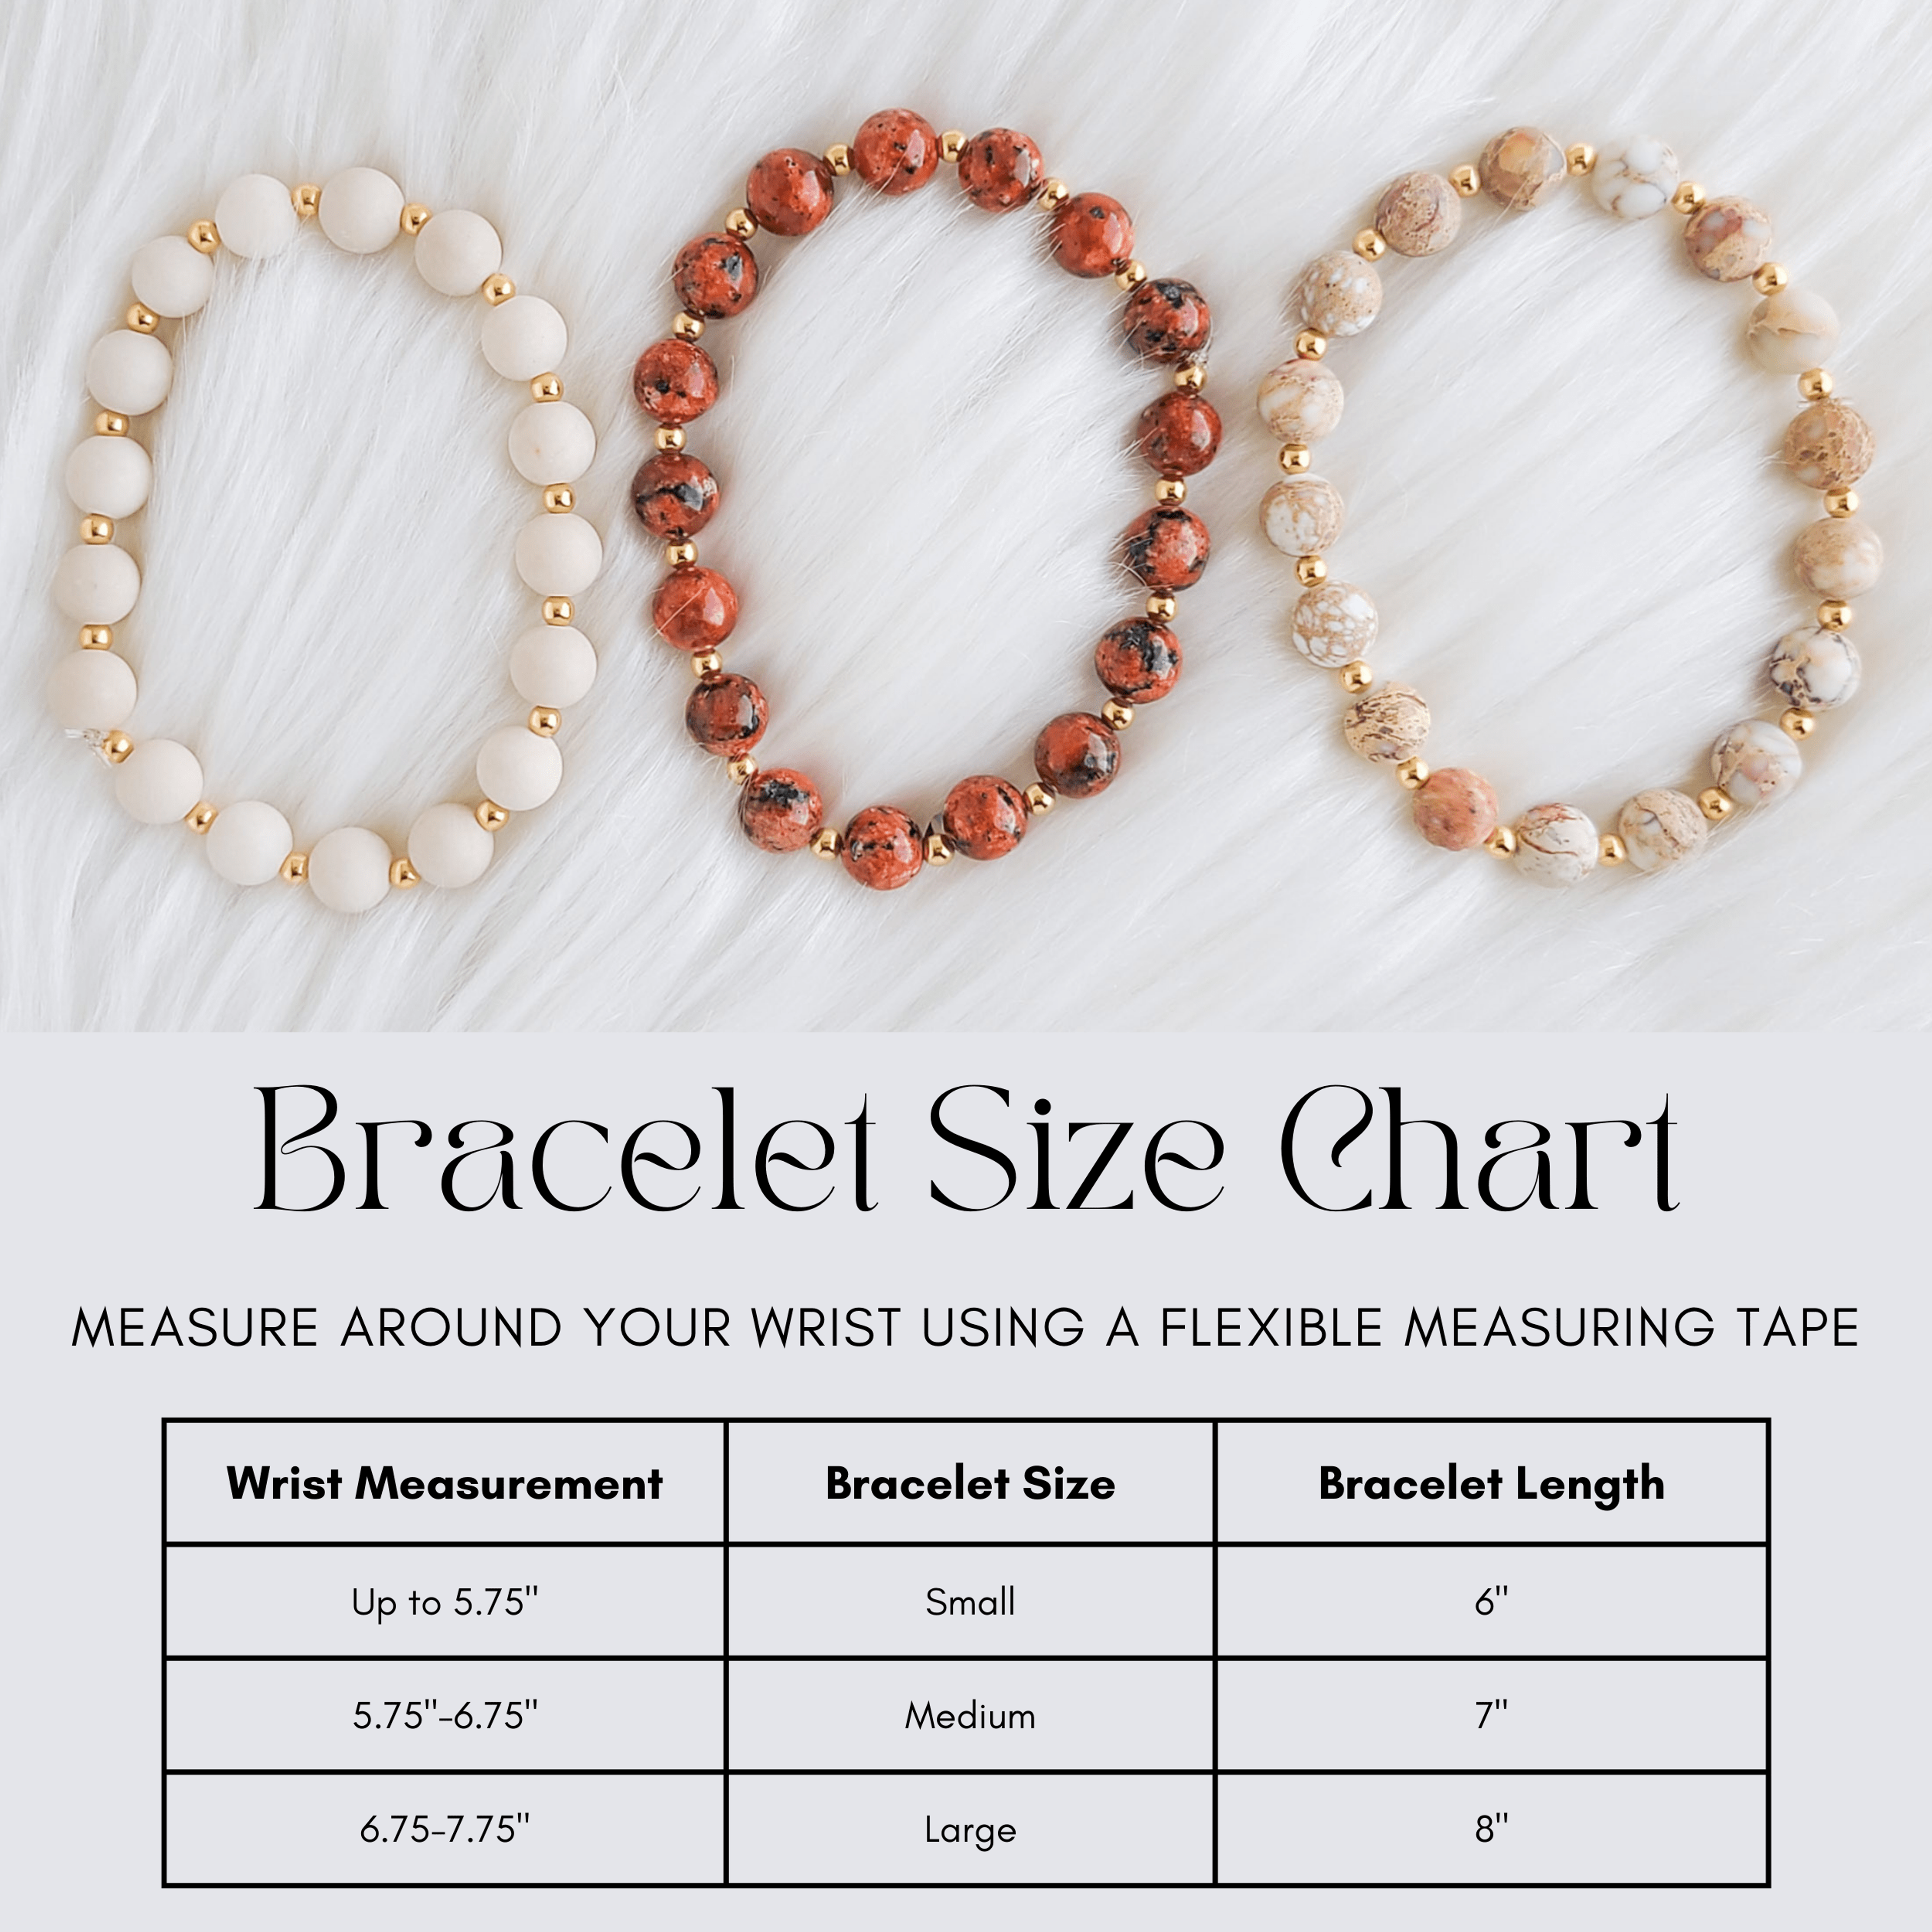 Fall Gemstone Bracelet Set (Warm)